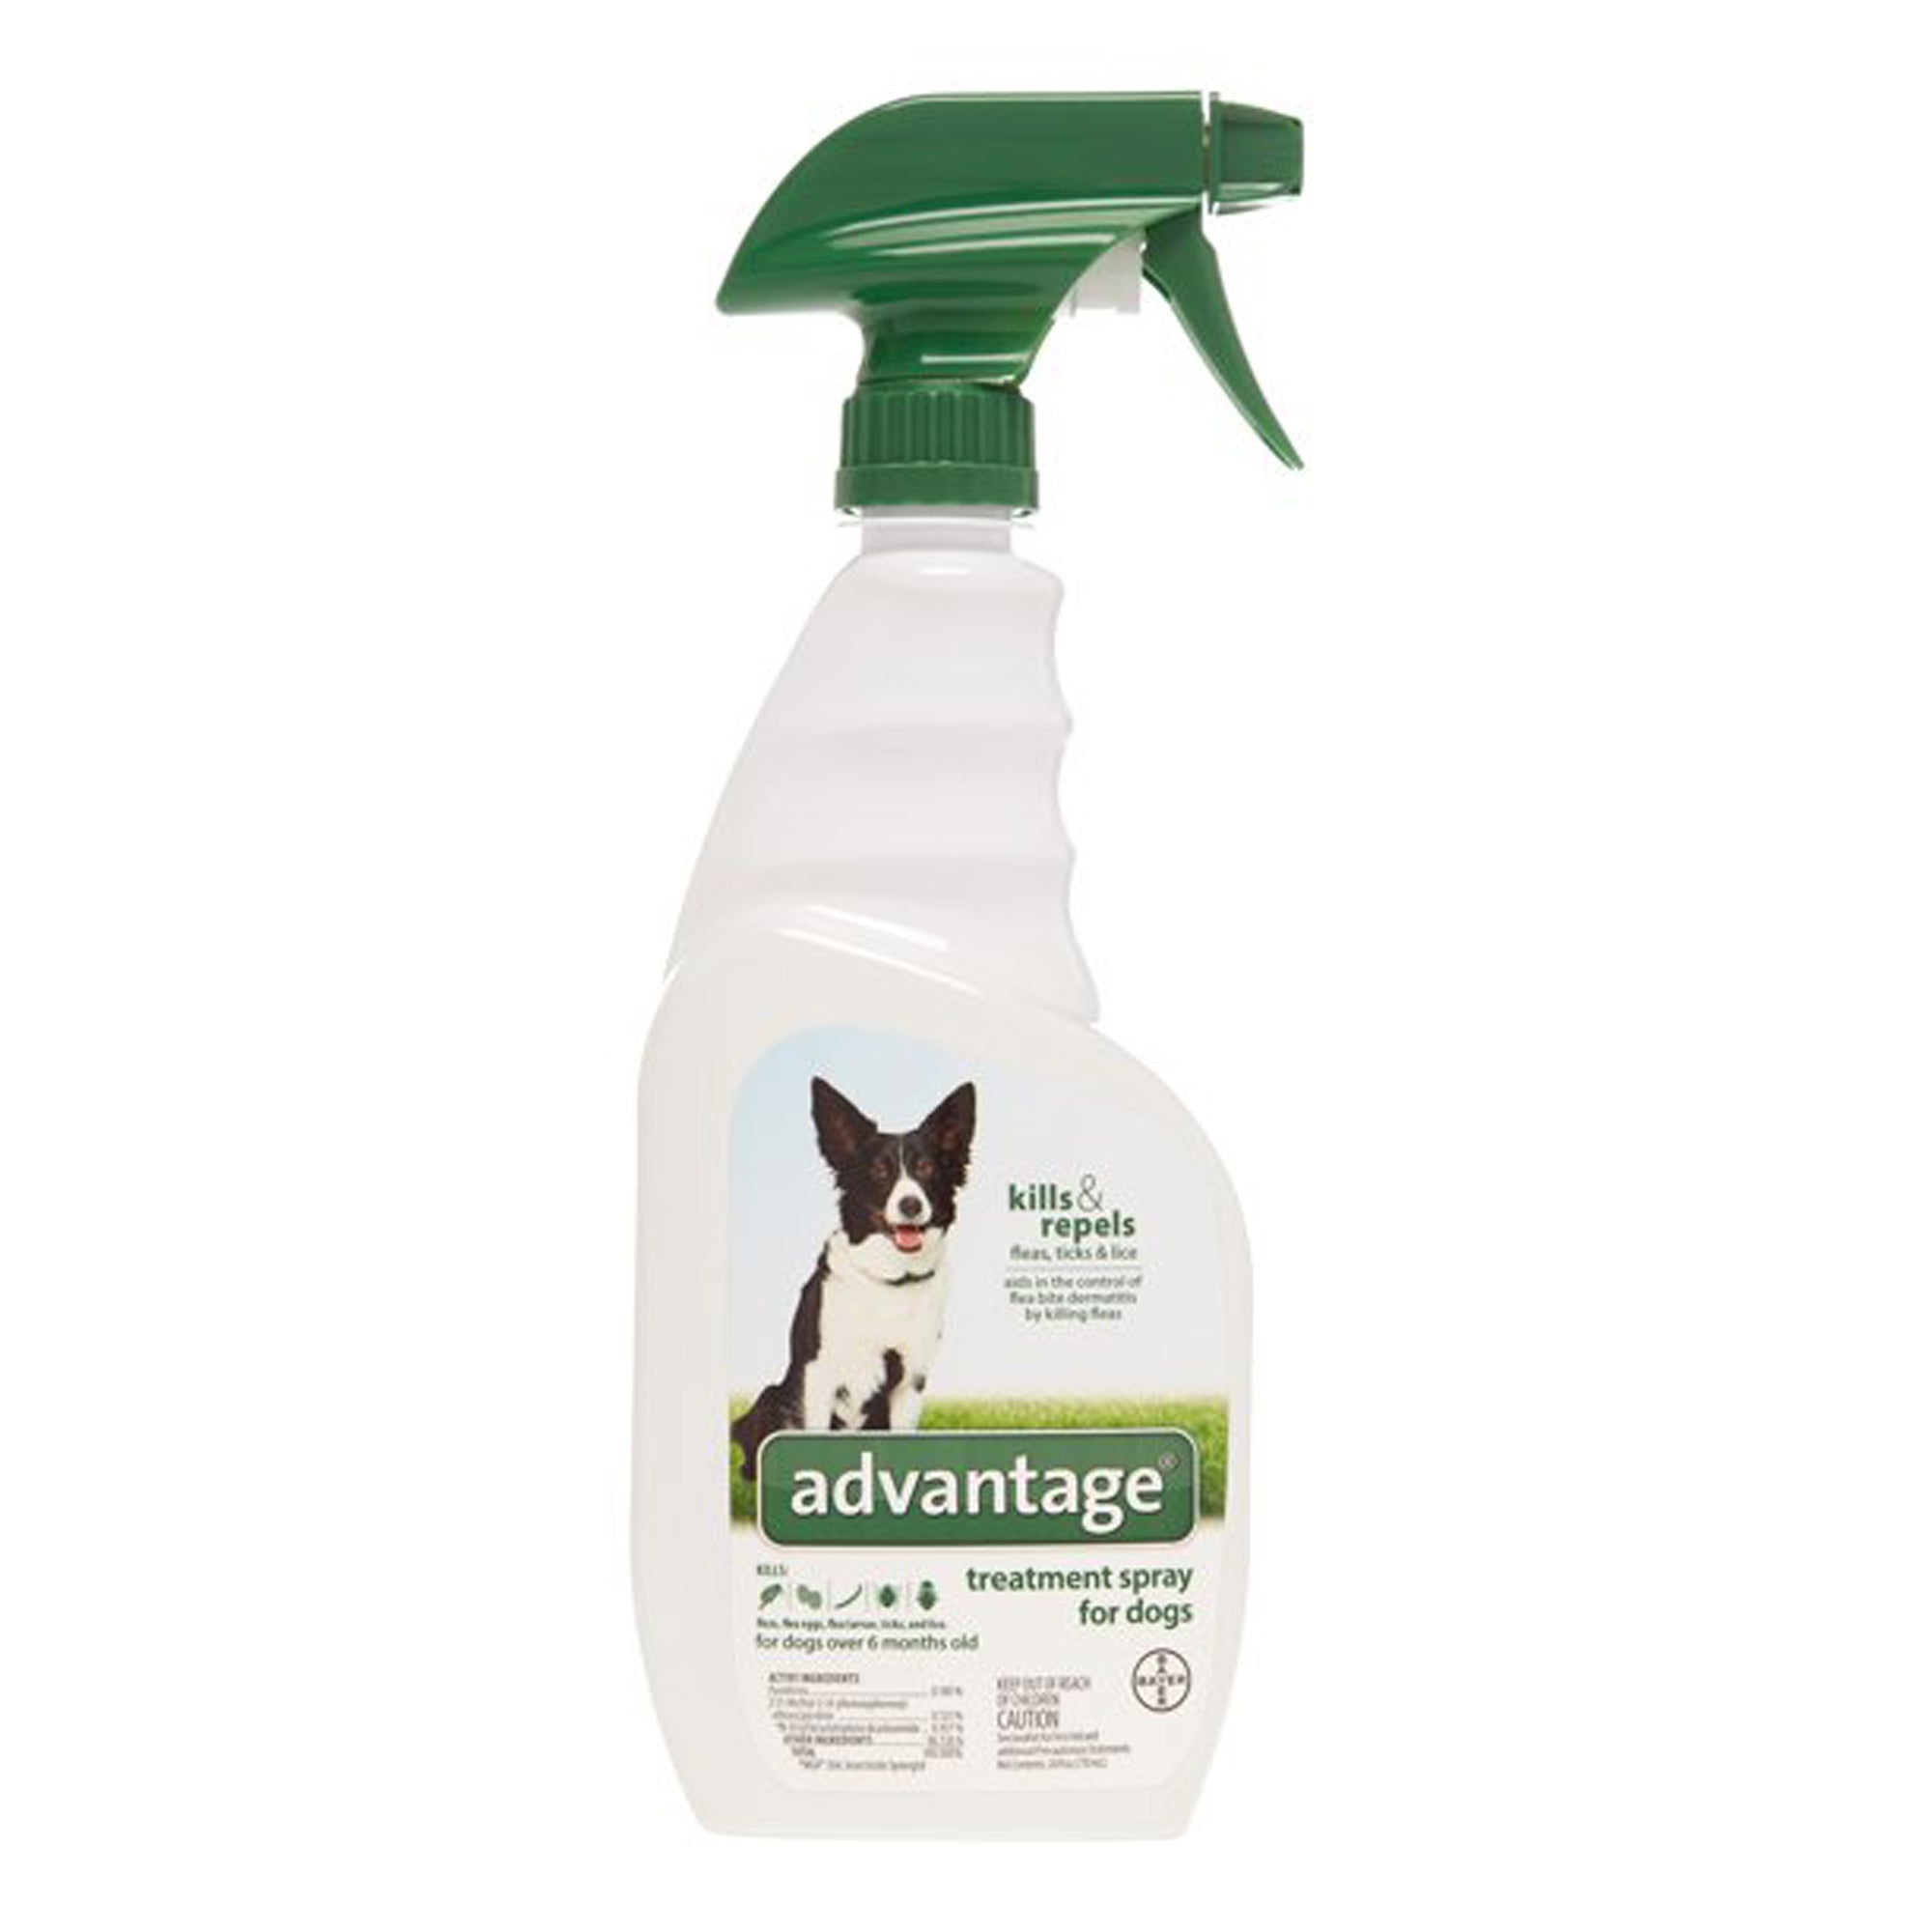 Advantage Dog Treatment Spray 24oz.